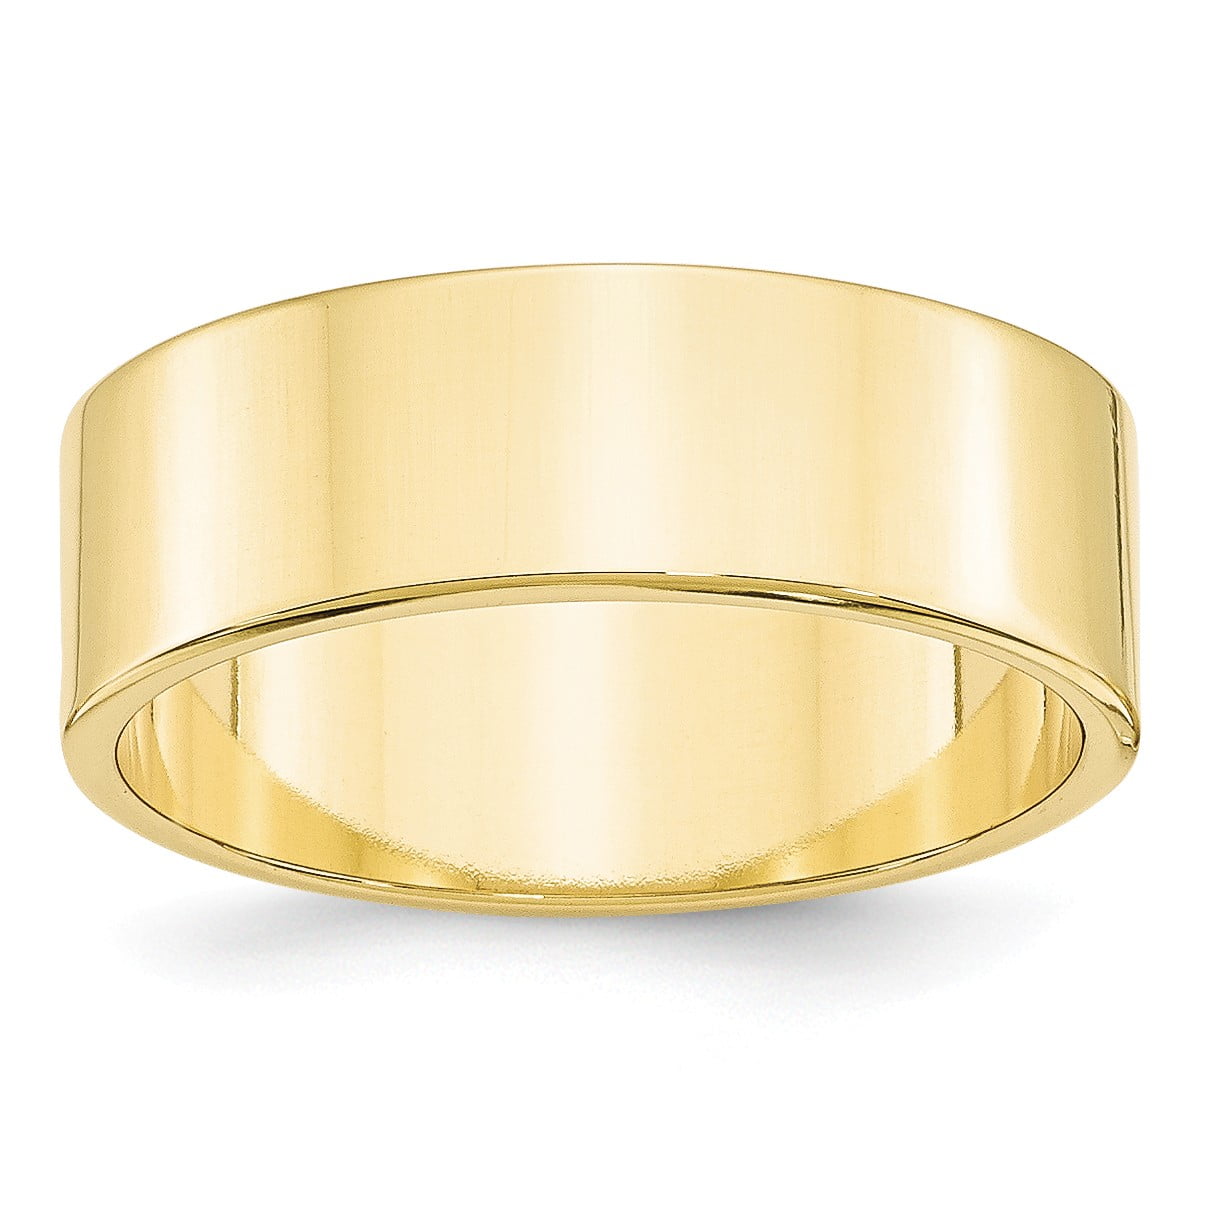 Size 10.5 Bonyak Jewelry 18k Rose Gold 1 mm Flat Band 